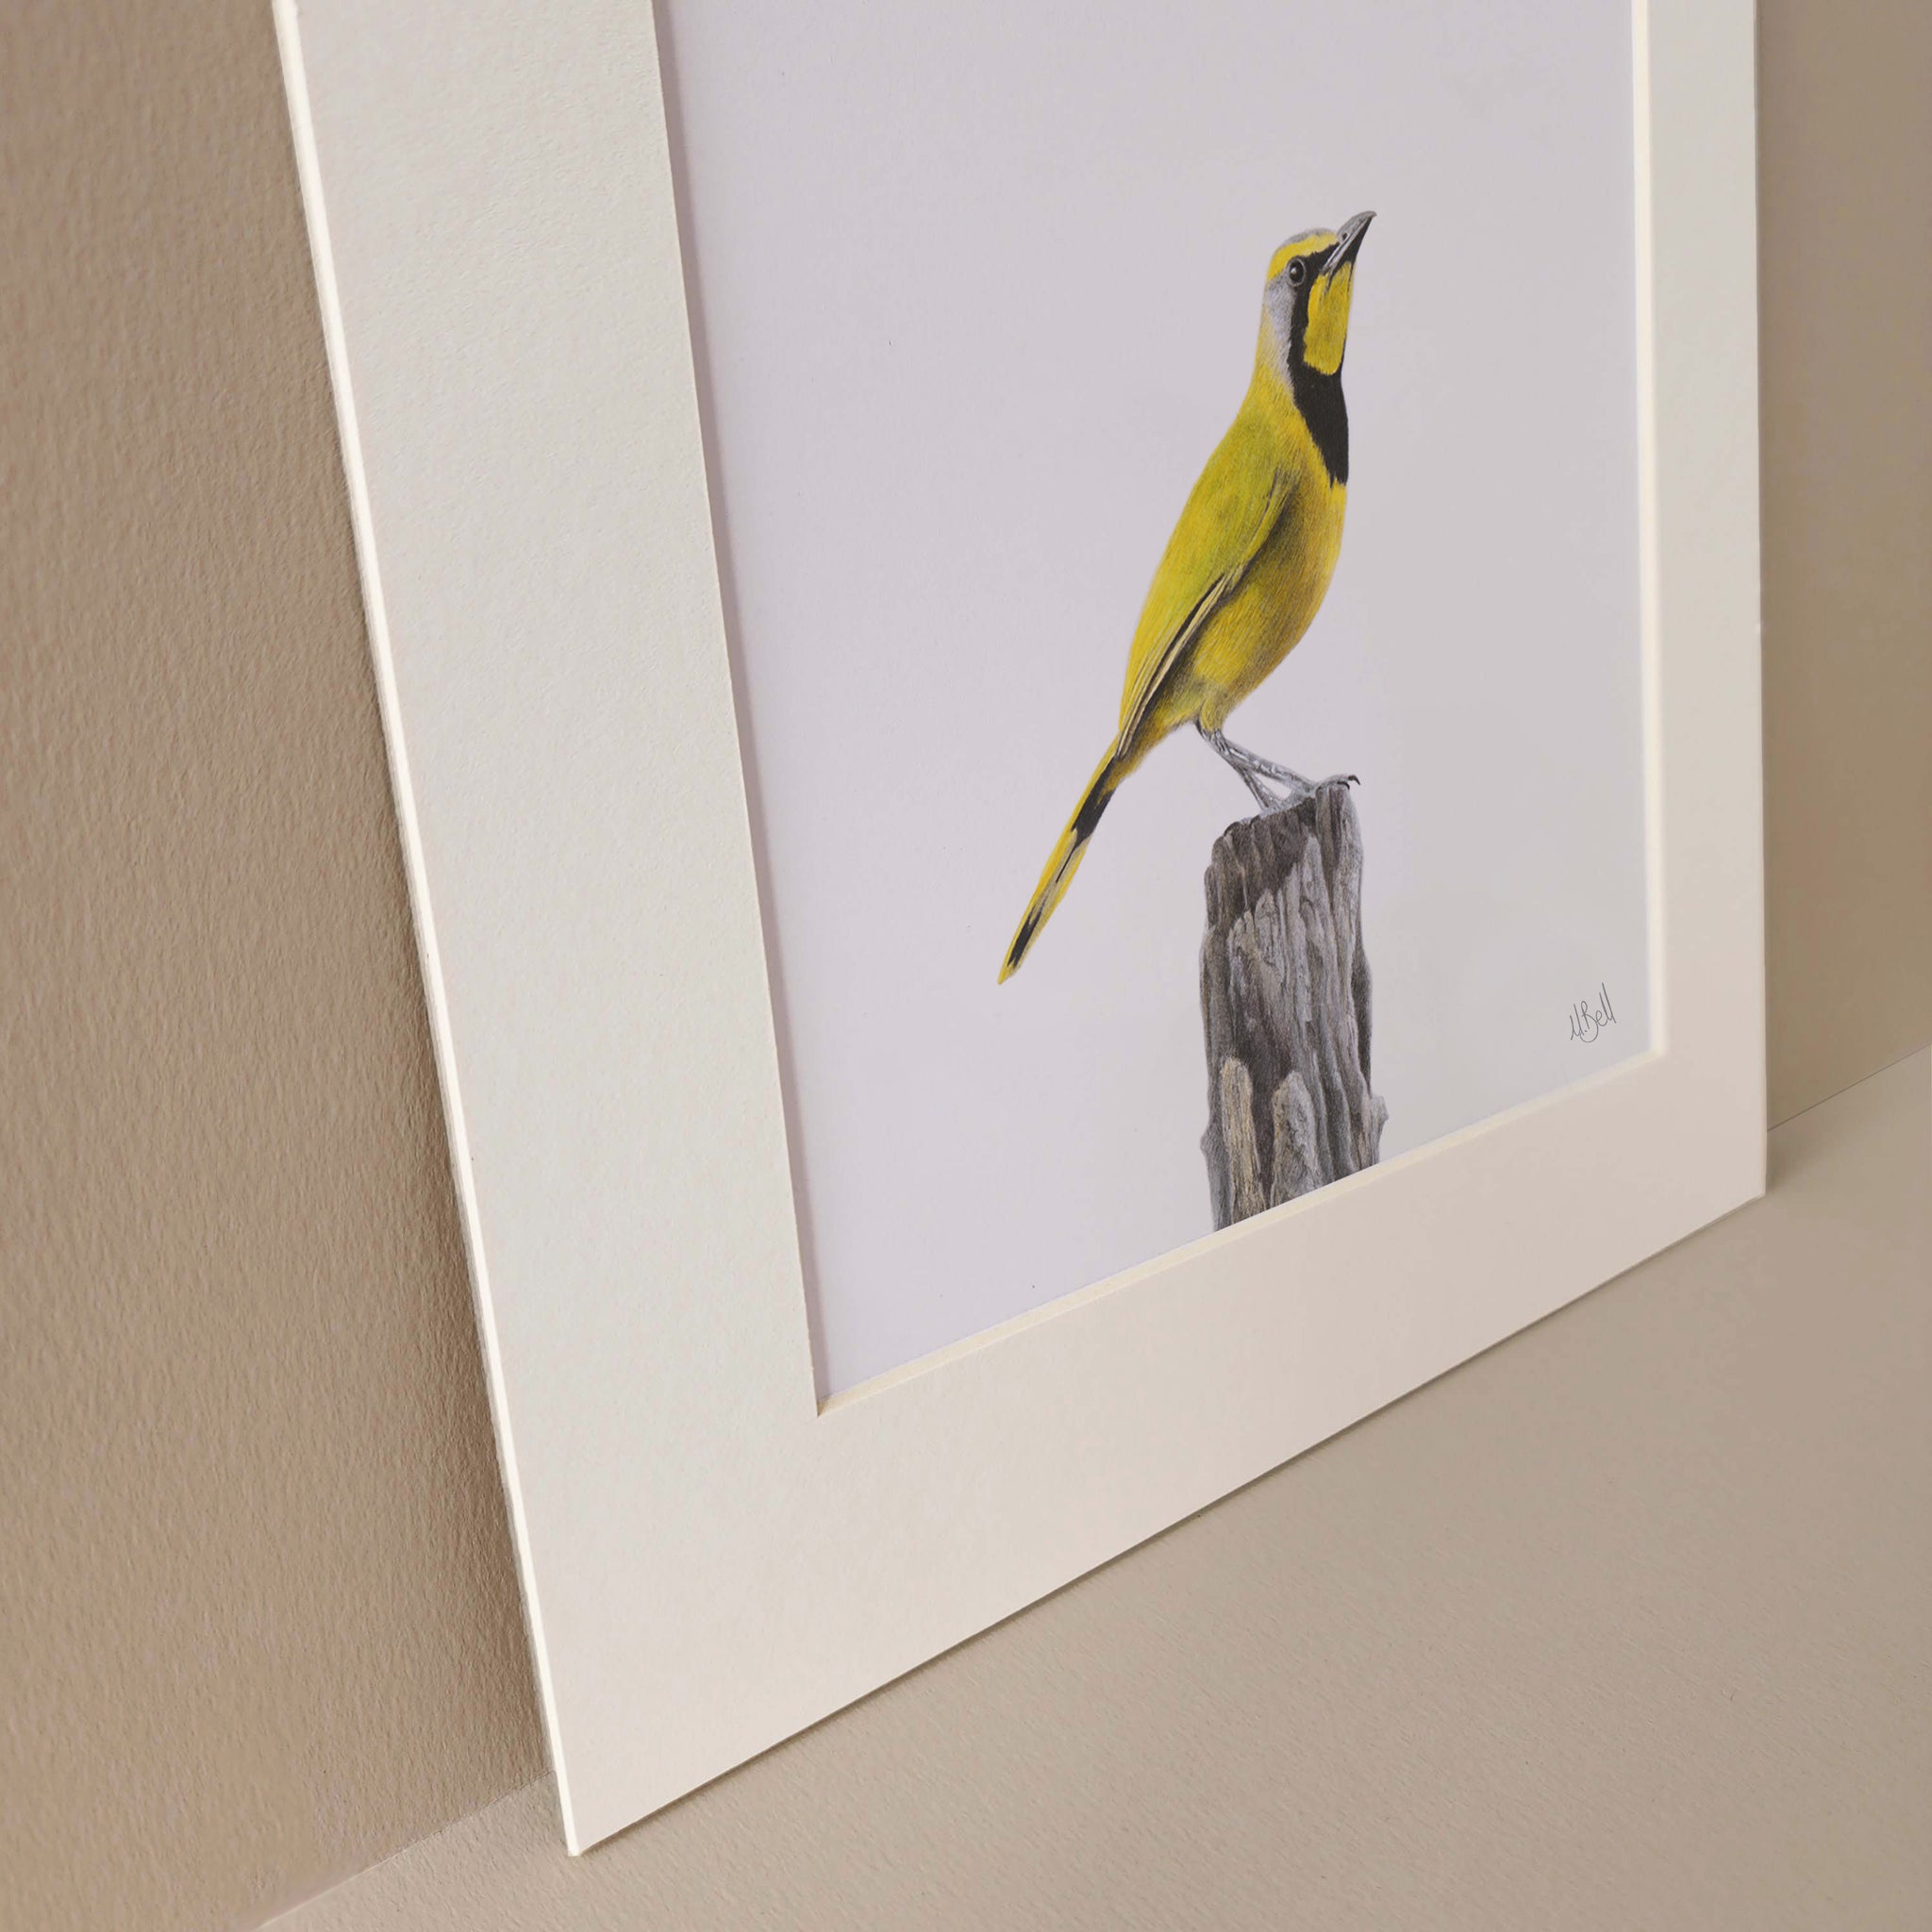 Bokmakiere bird of South Africa pencil artwork by wildlife artist Matthew Bell